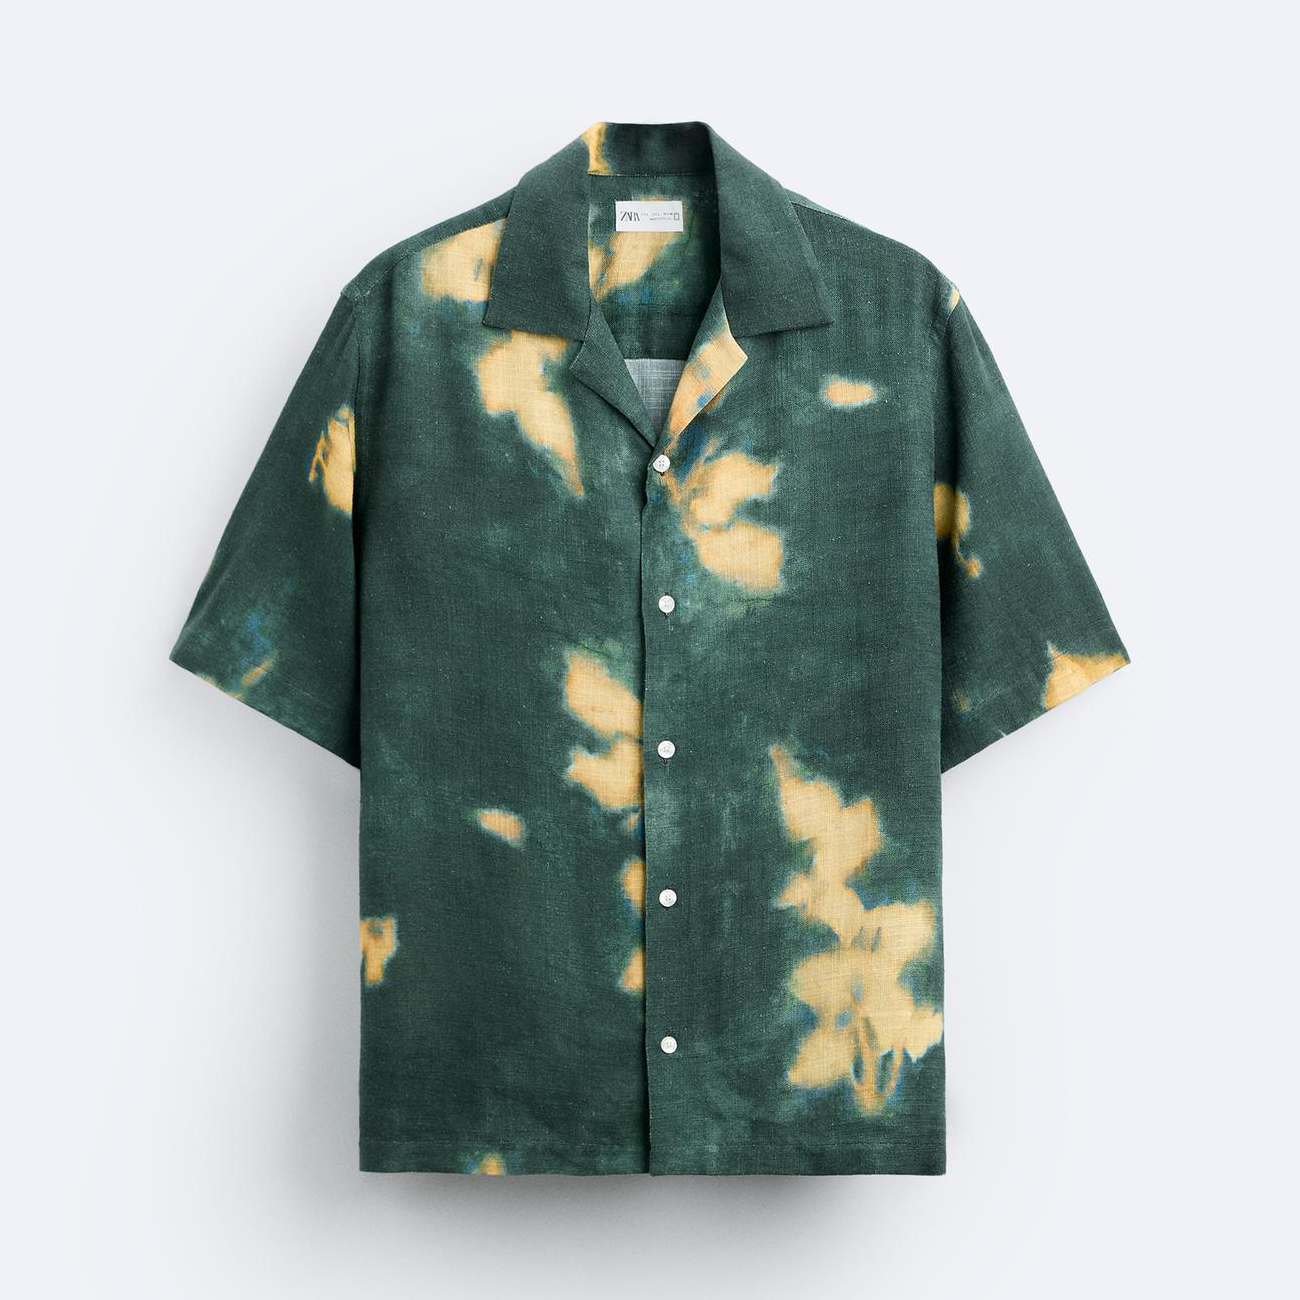 Рубашка Zara Printed Linen/viscose, зеленый рубашка zara textured linen cotton зеленый